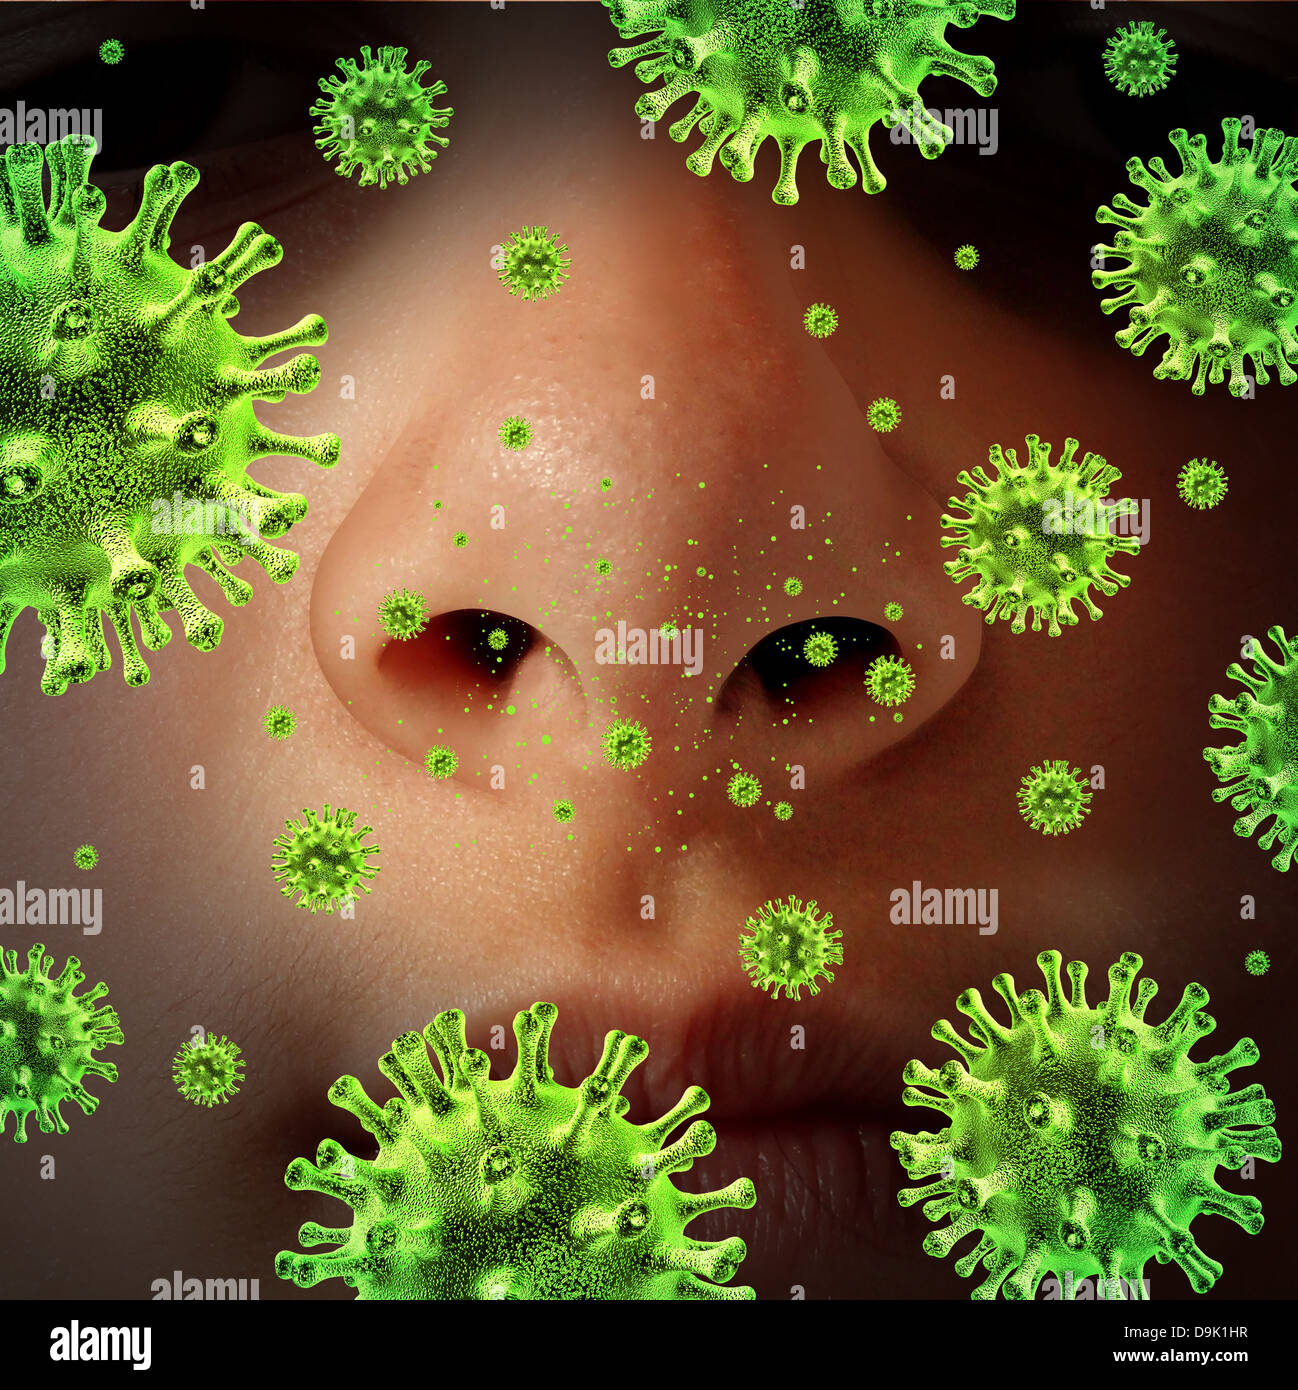 Nasal infection as a contagious sinus disease transmitting a virus